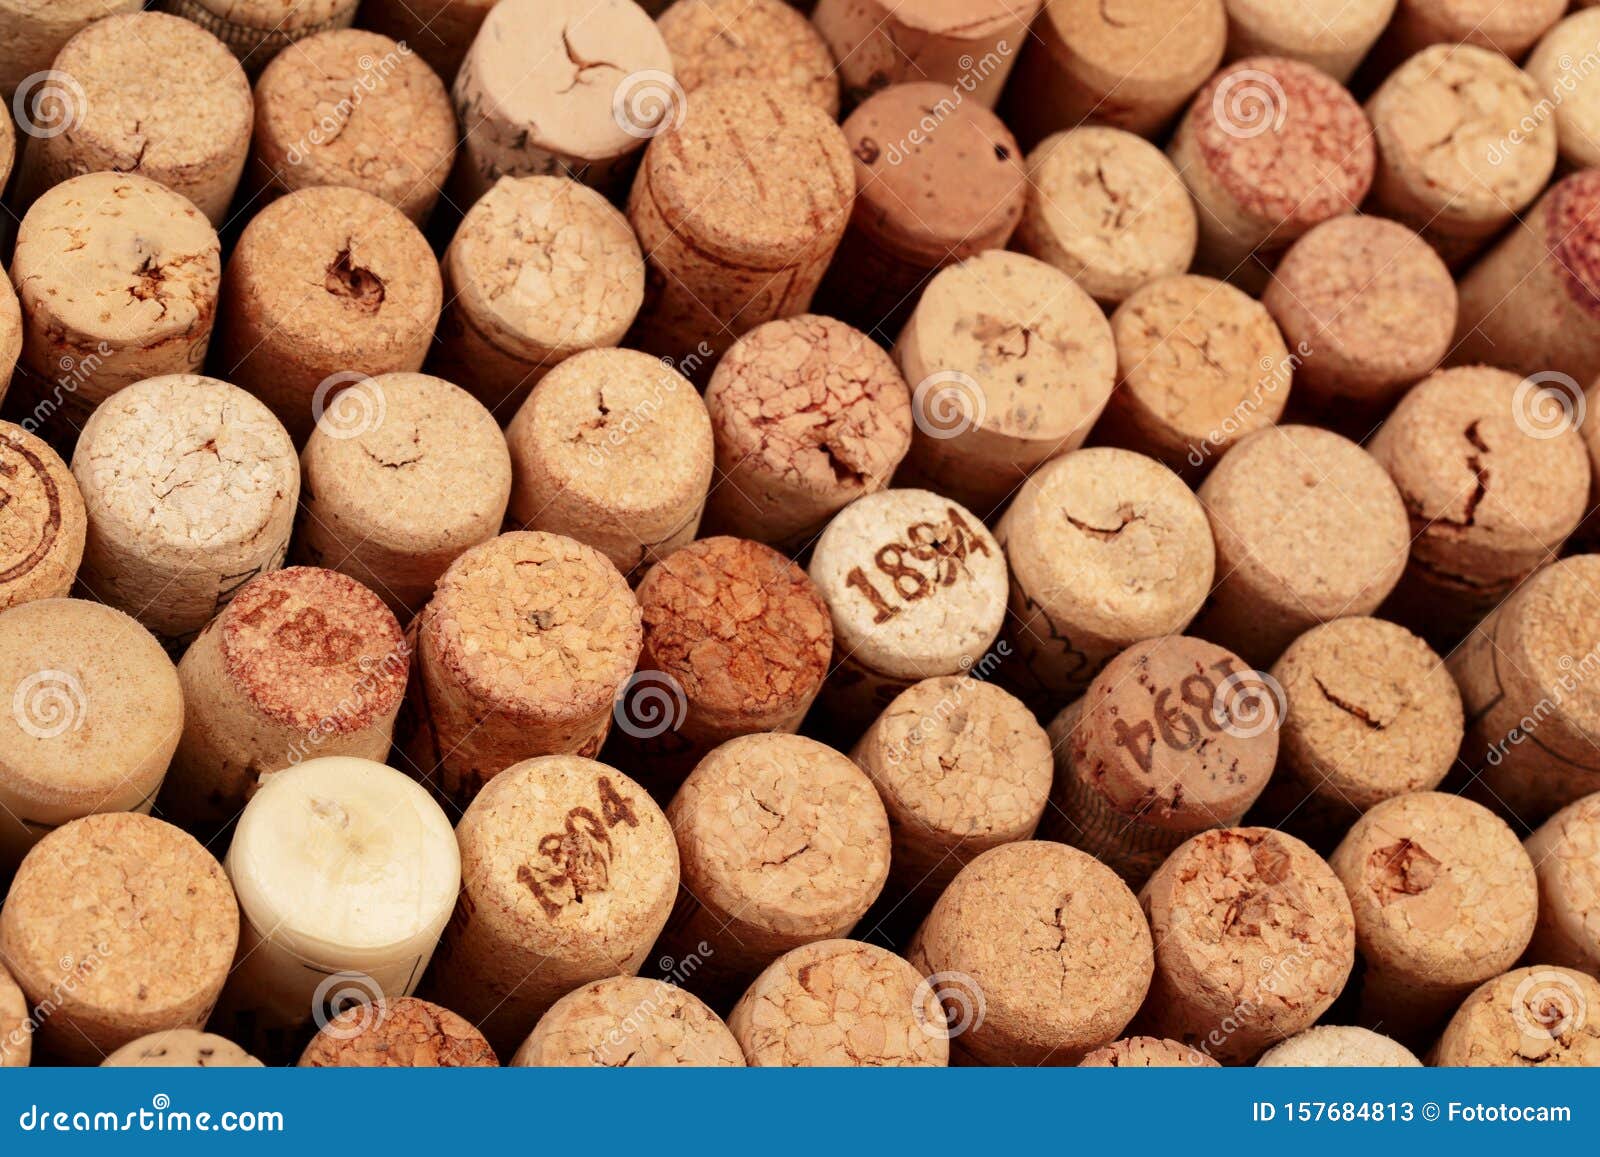 Ends of Wine Corks Background - Image Stock Image - Image of plug ...